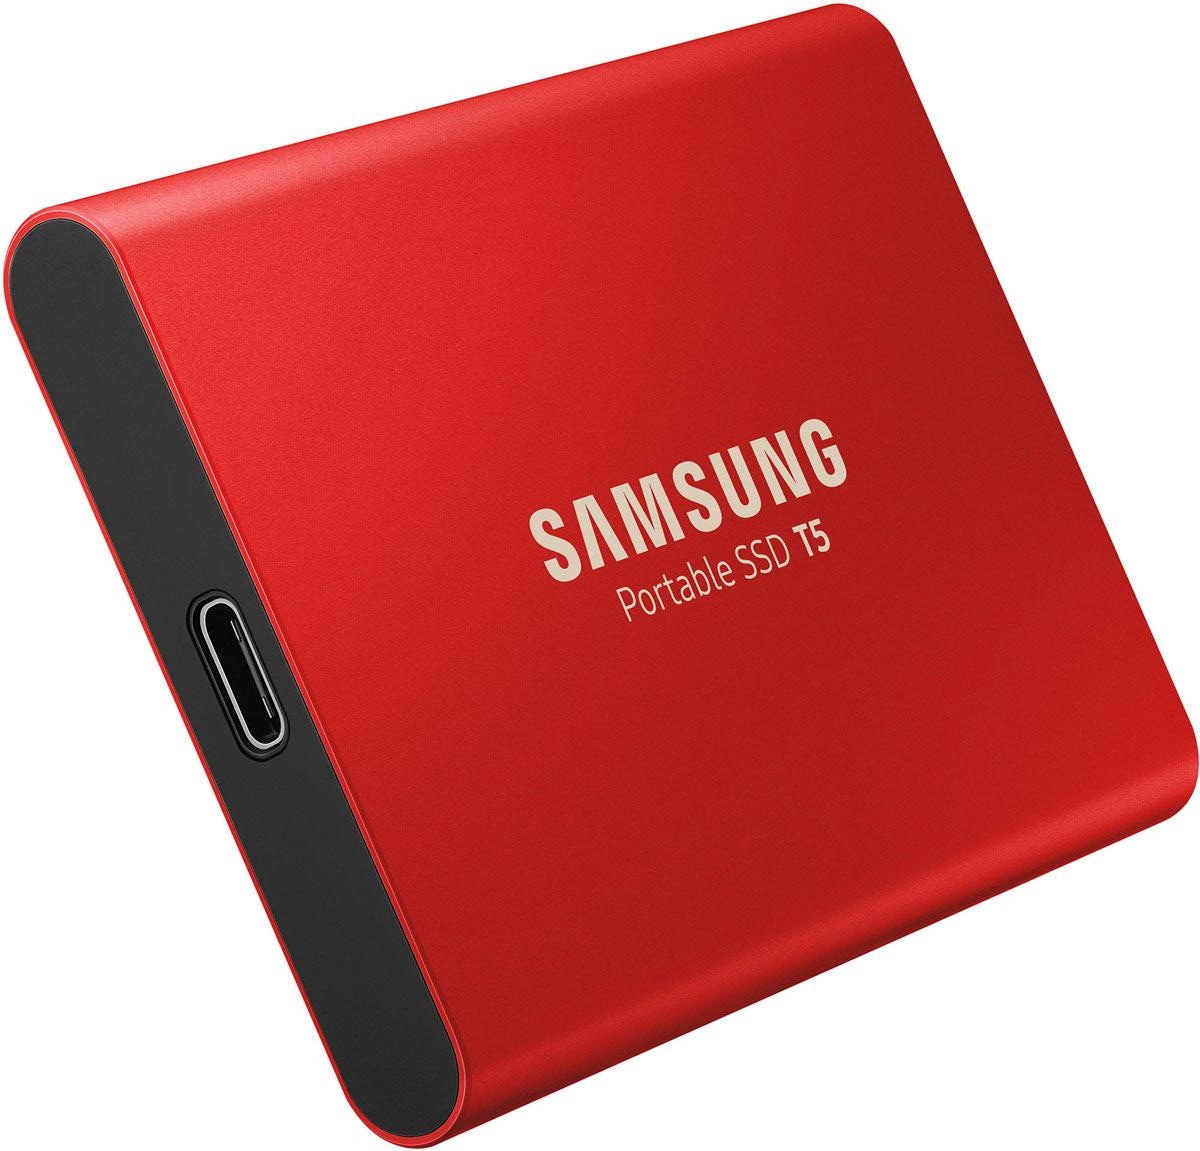 Samsung externe SSD »Portable SSD T5«, Anschluss USB 3.1, USB 3.1